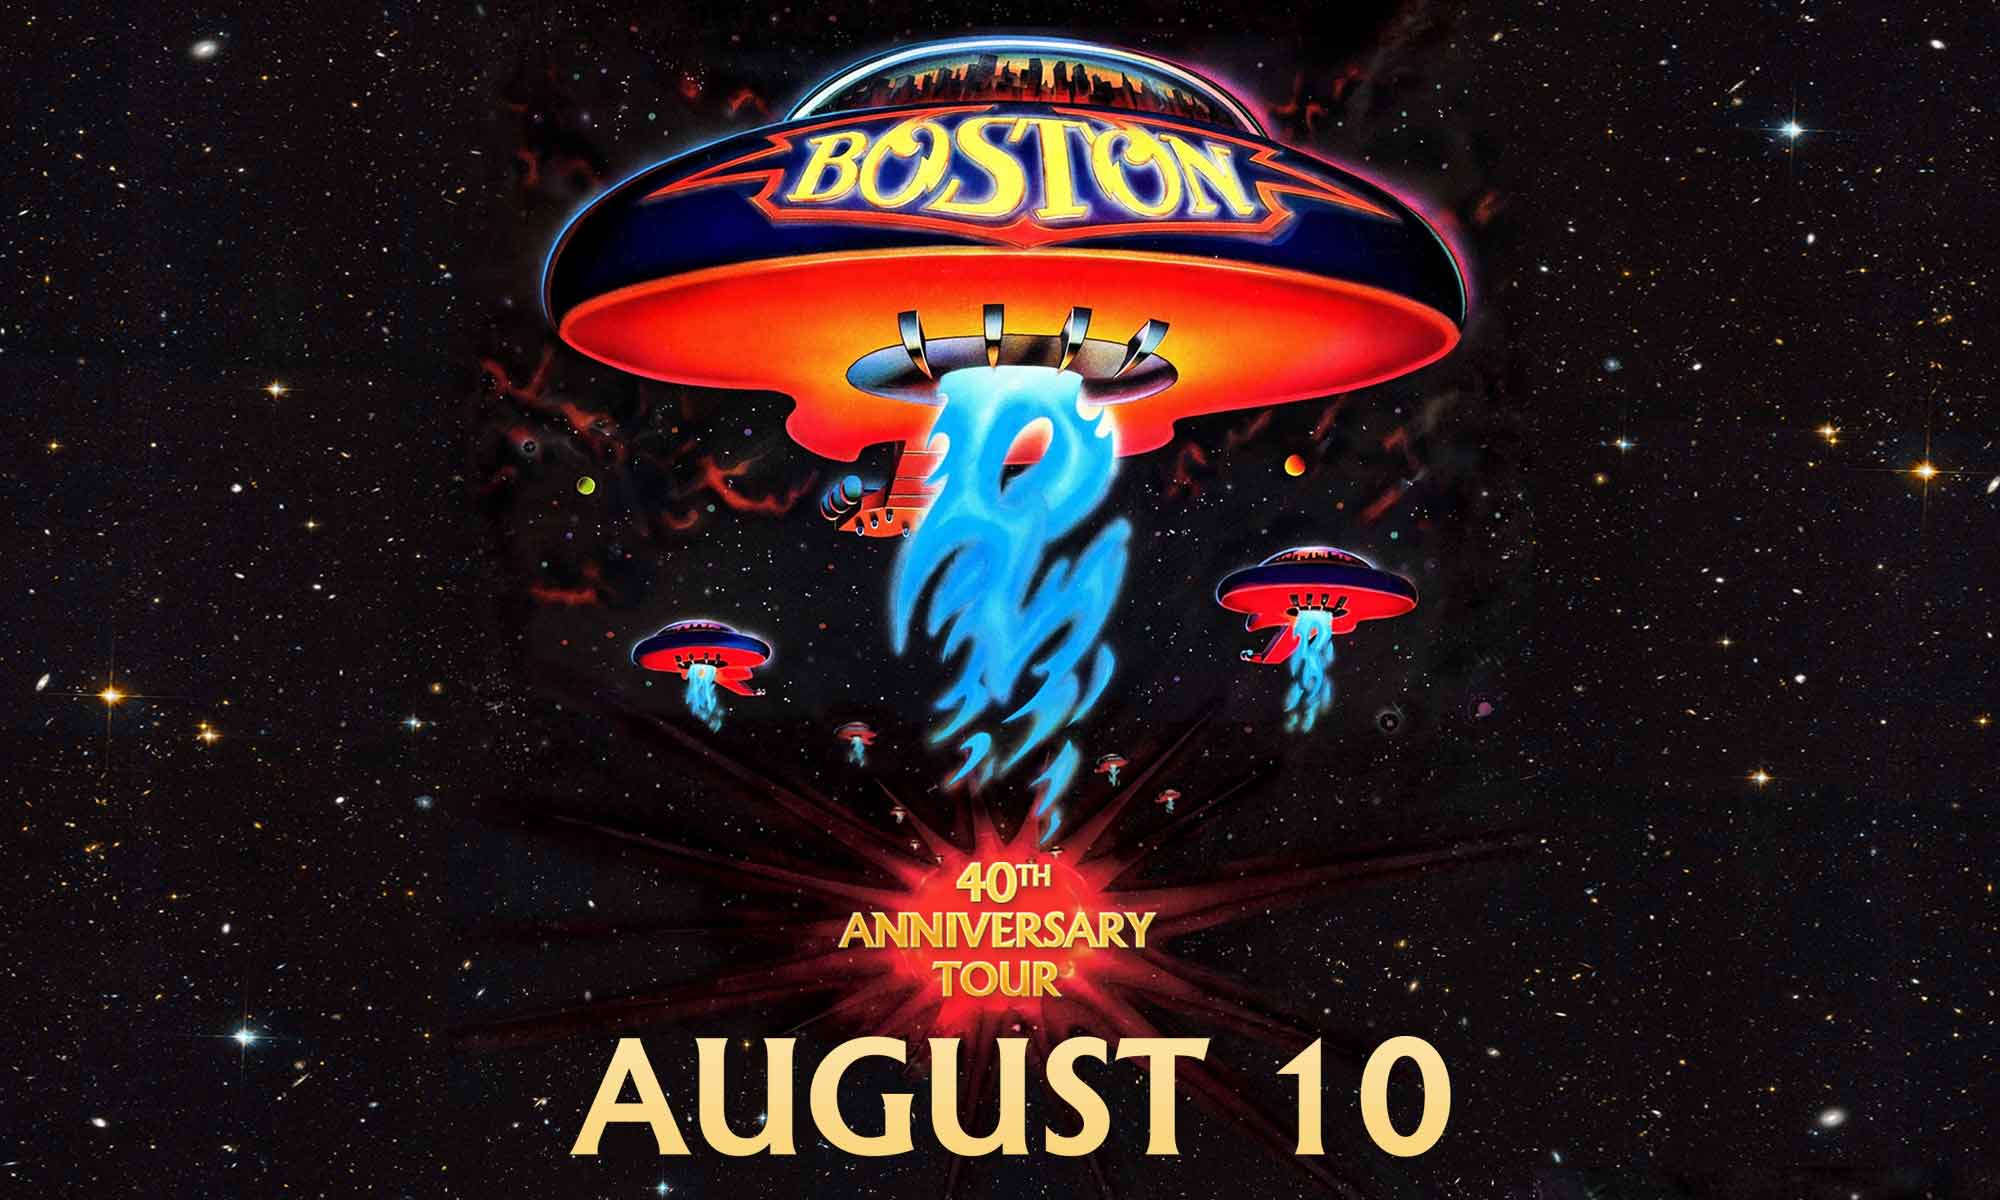 Boston at Coney Island Amphitheater on 08-10-16